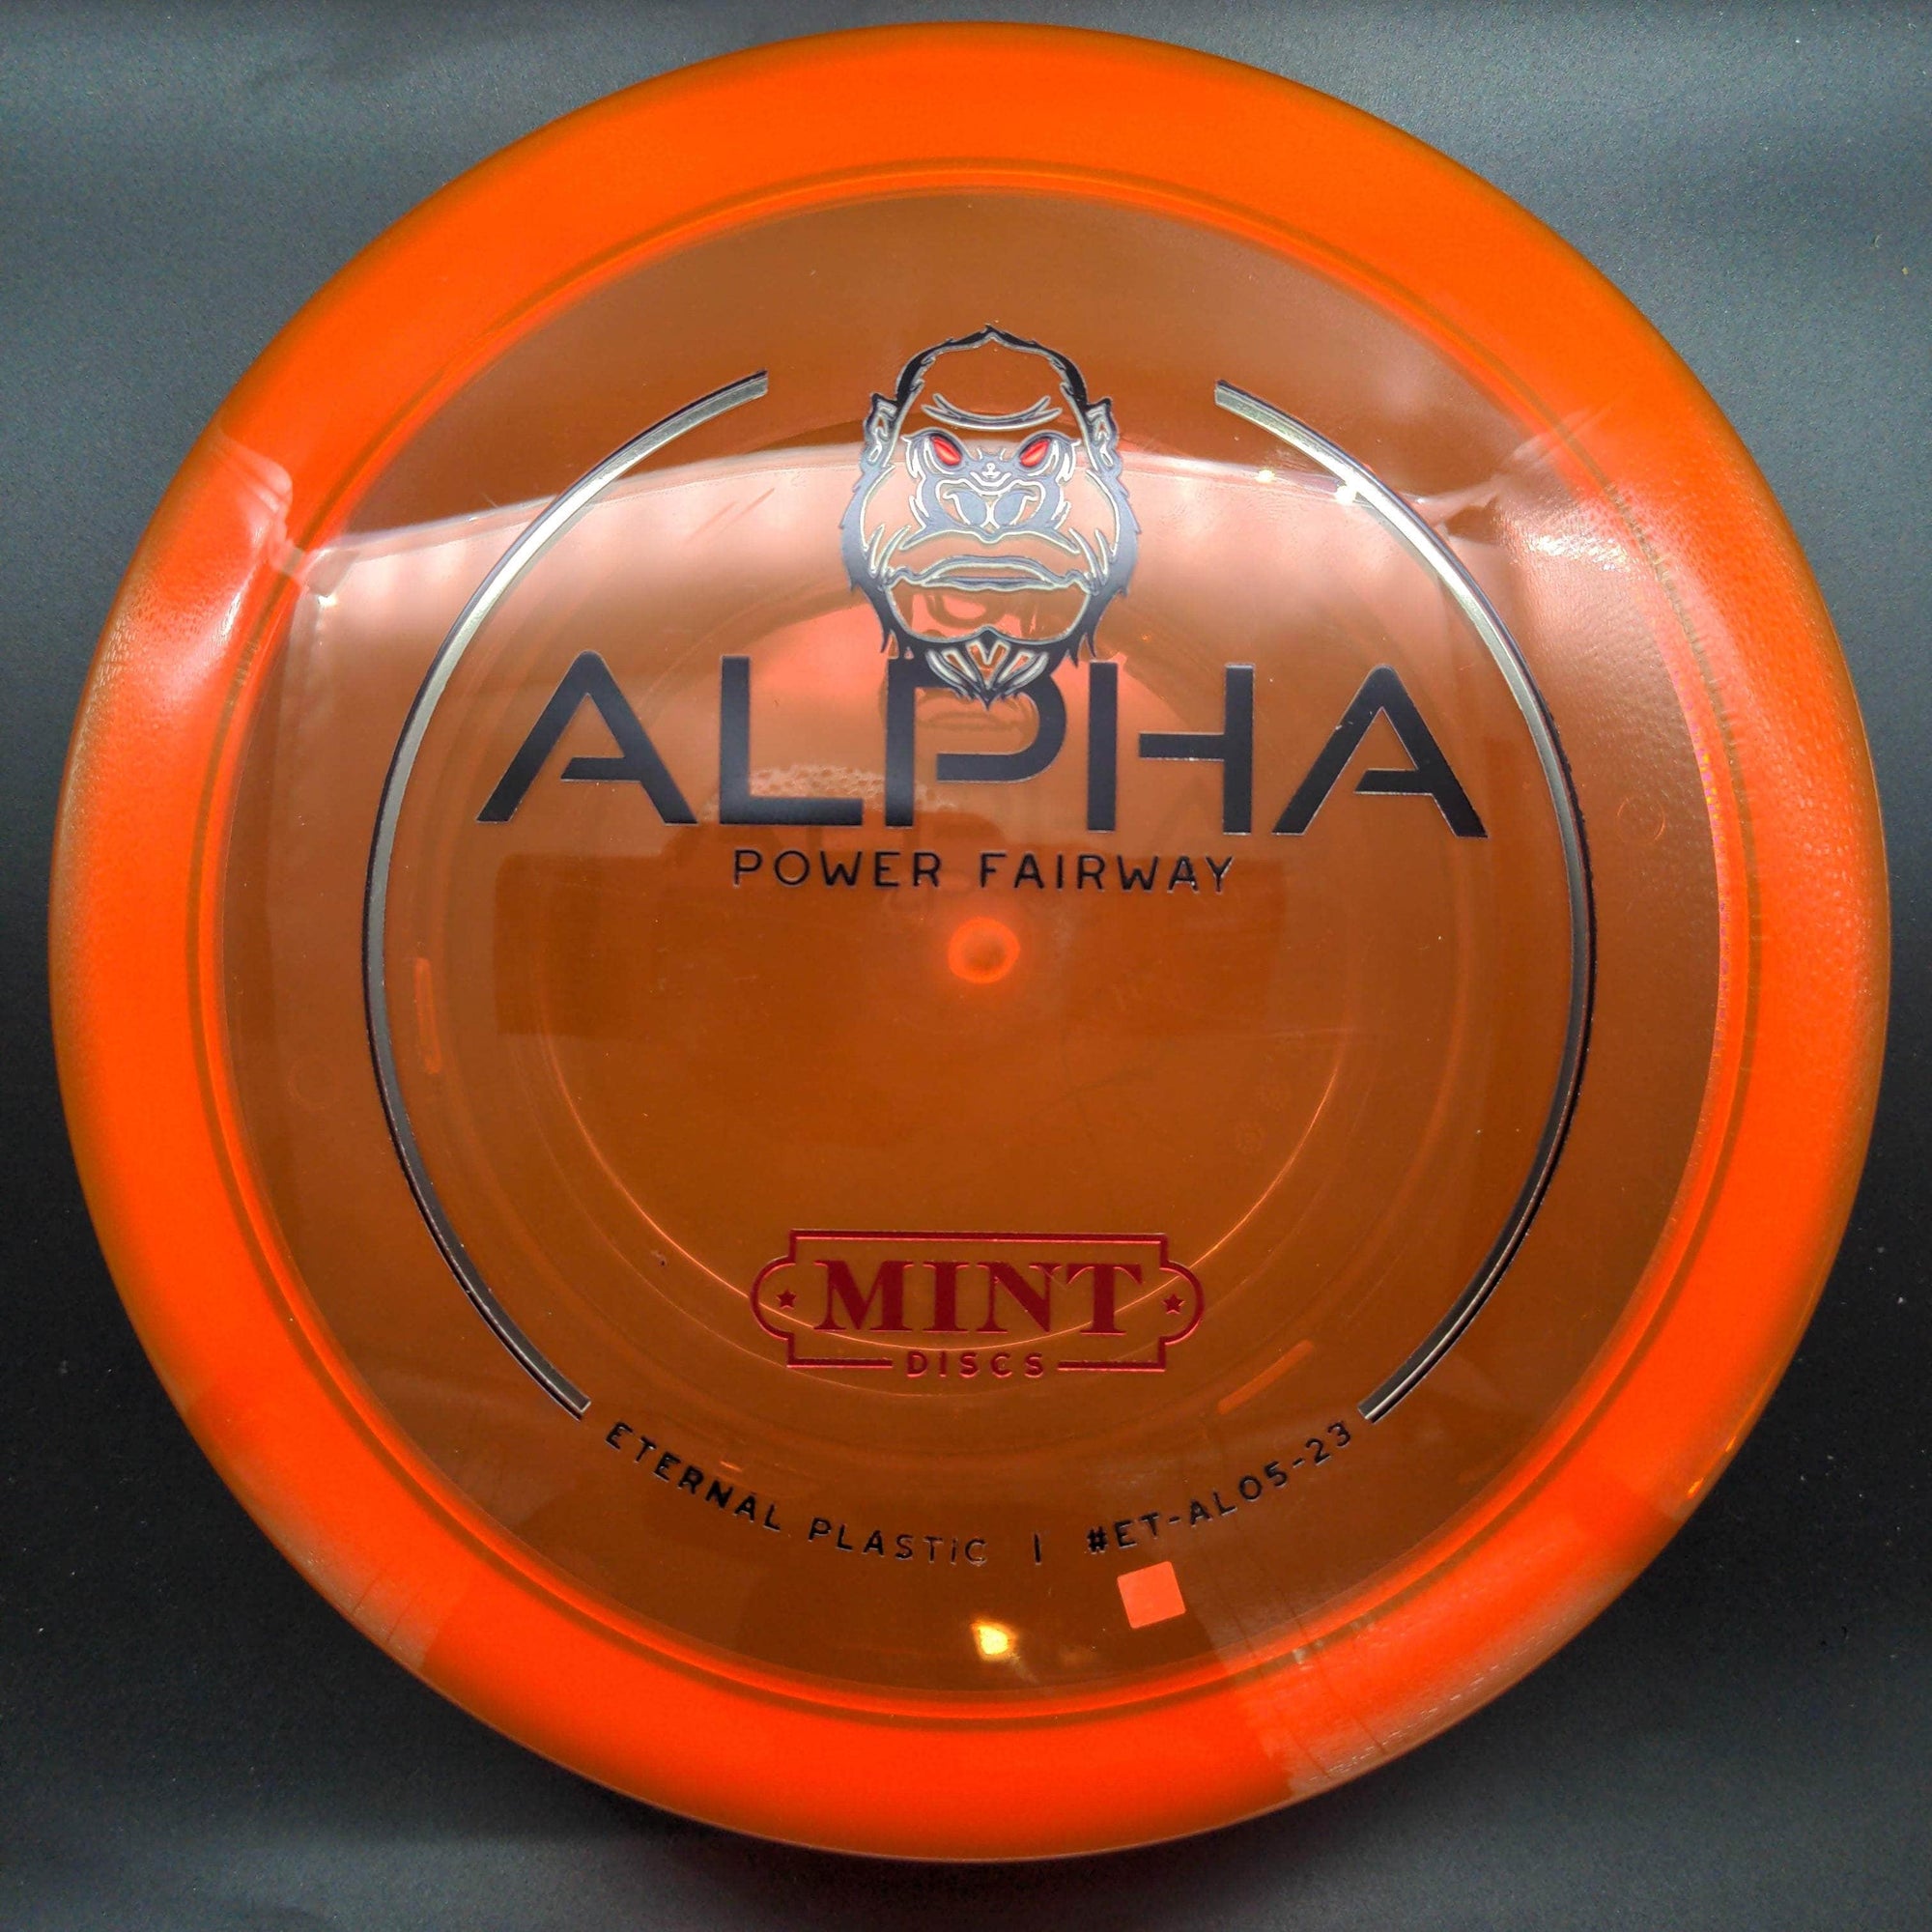 Mint Discs Fairway Driver Orange Red Stamp 174g 2 Alpha, Enteral Plastic